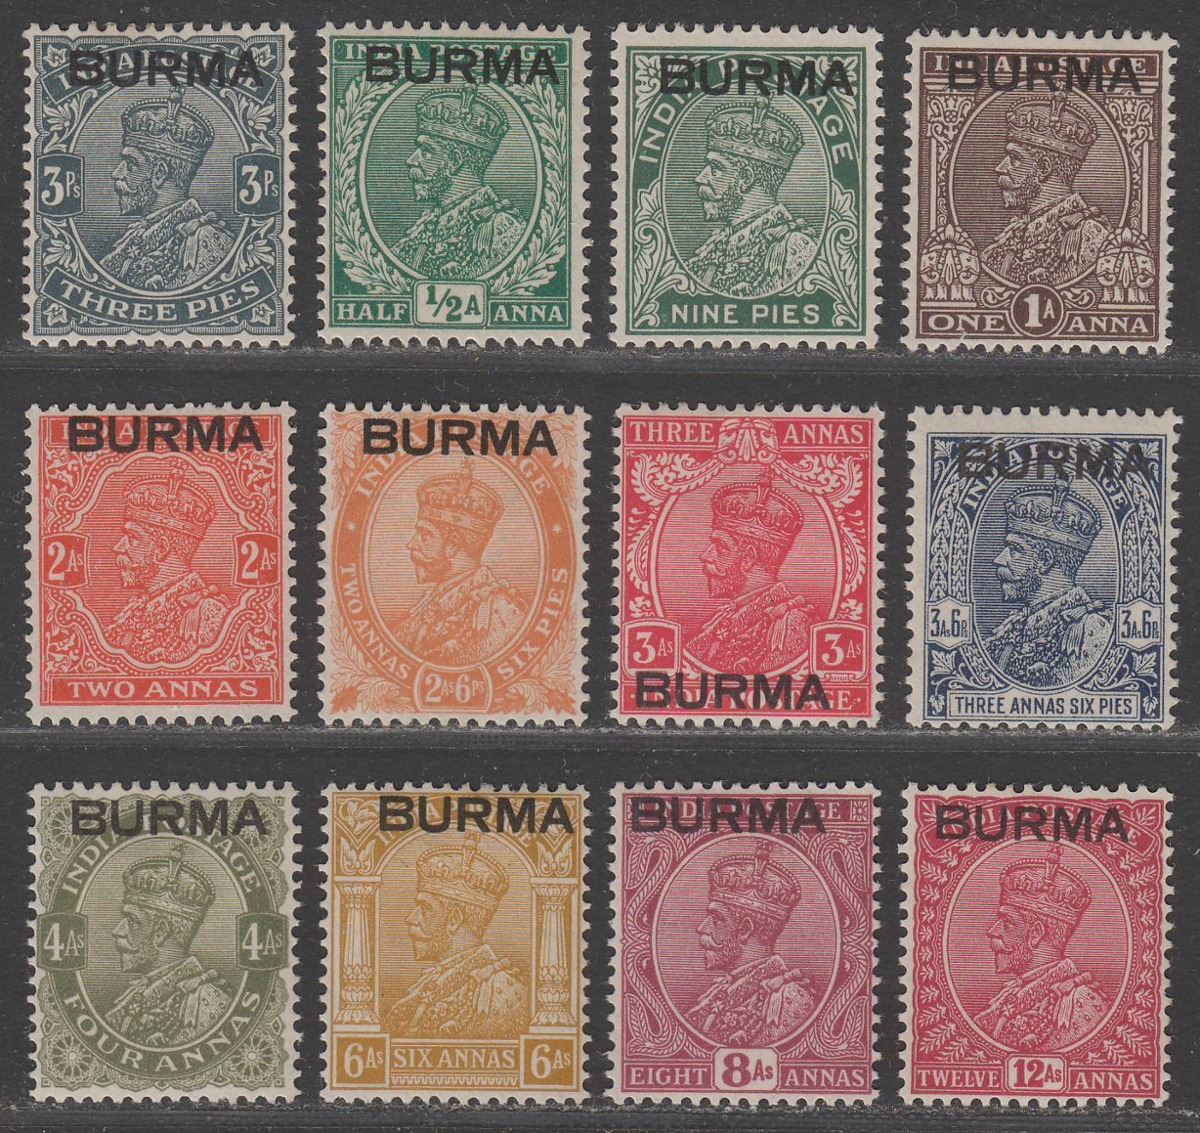 Burma 1937 King George V Overprint Set to 12a Mint SG1-12 cat £50